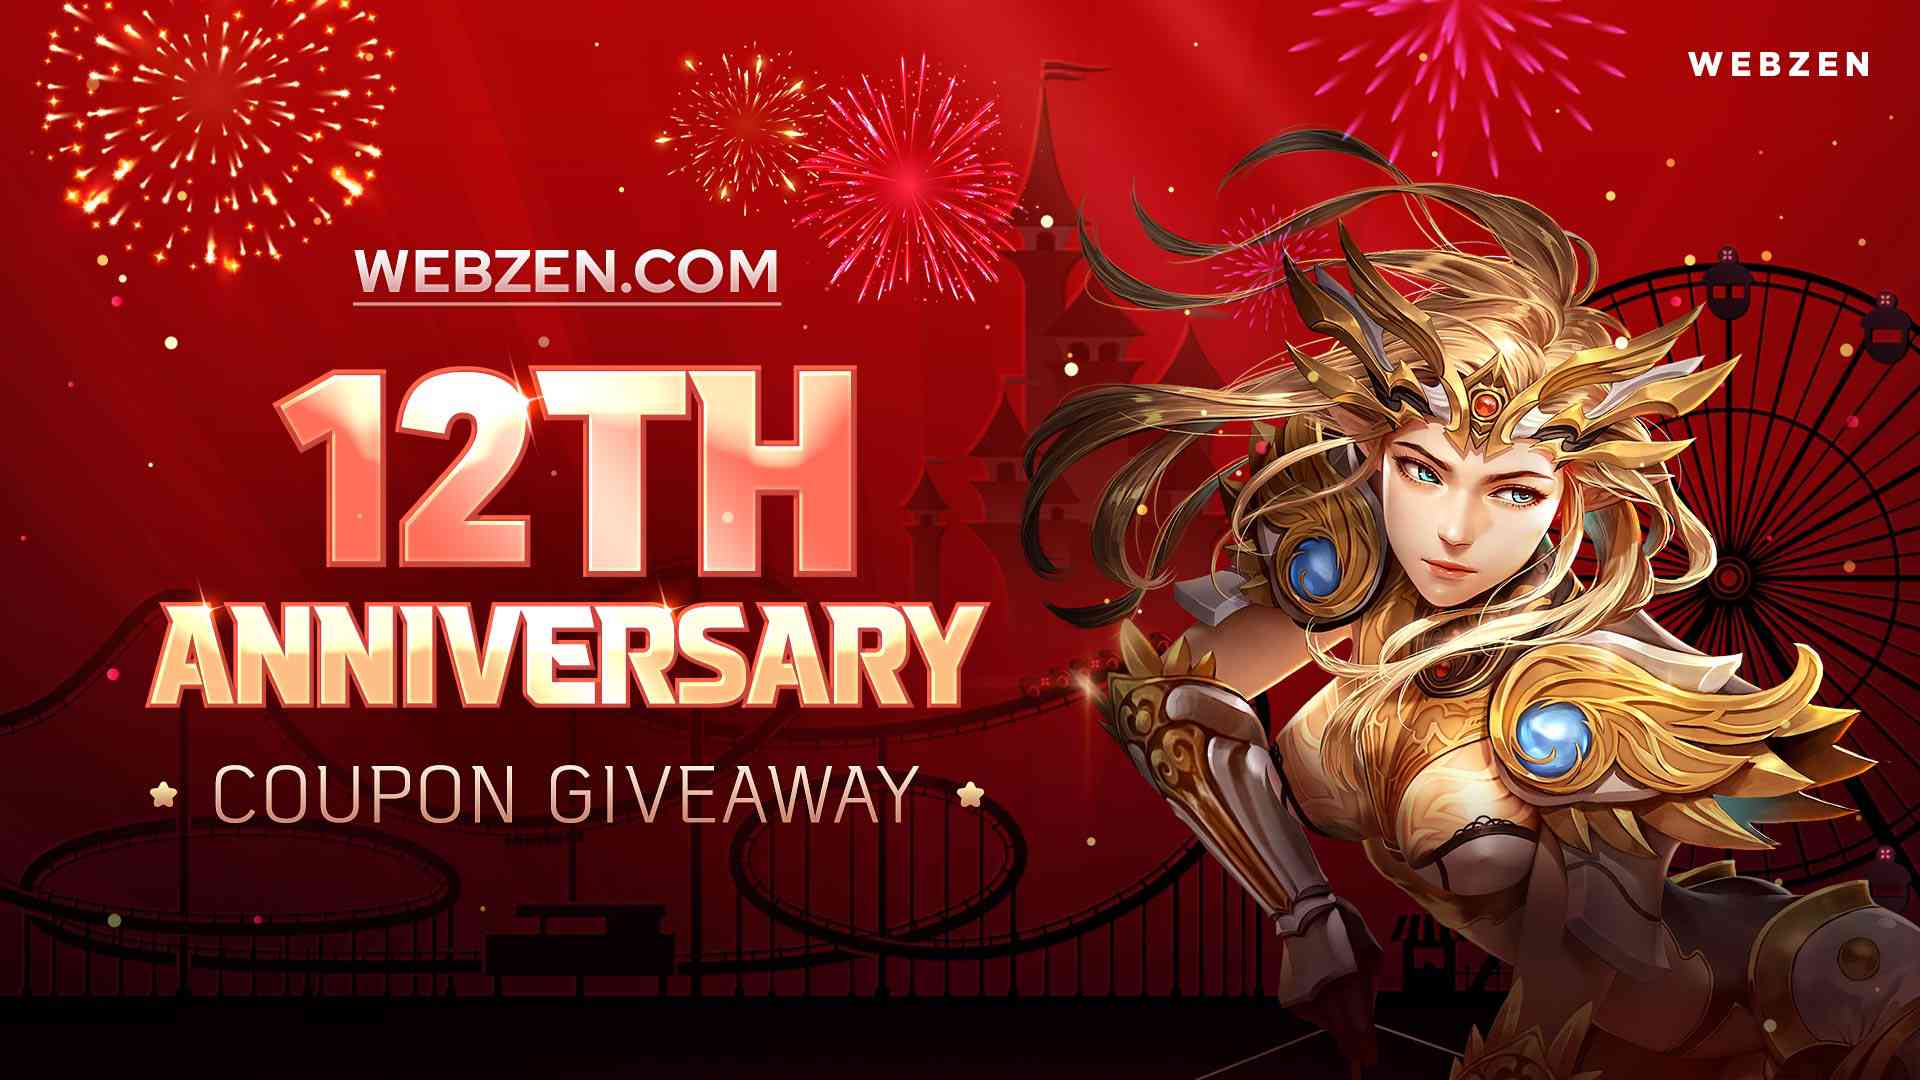 WEBZEN.COM’s 12th Anniversary Giveaway 18